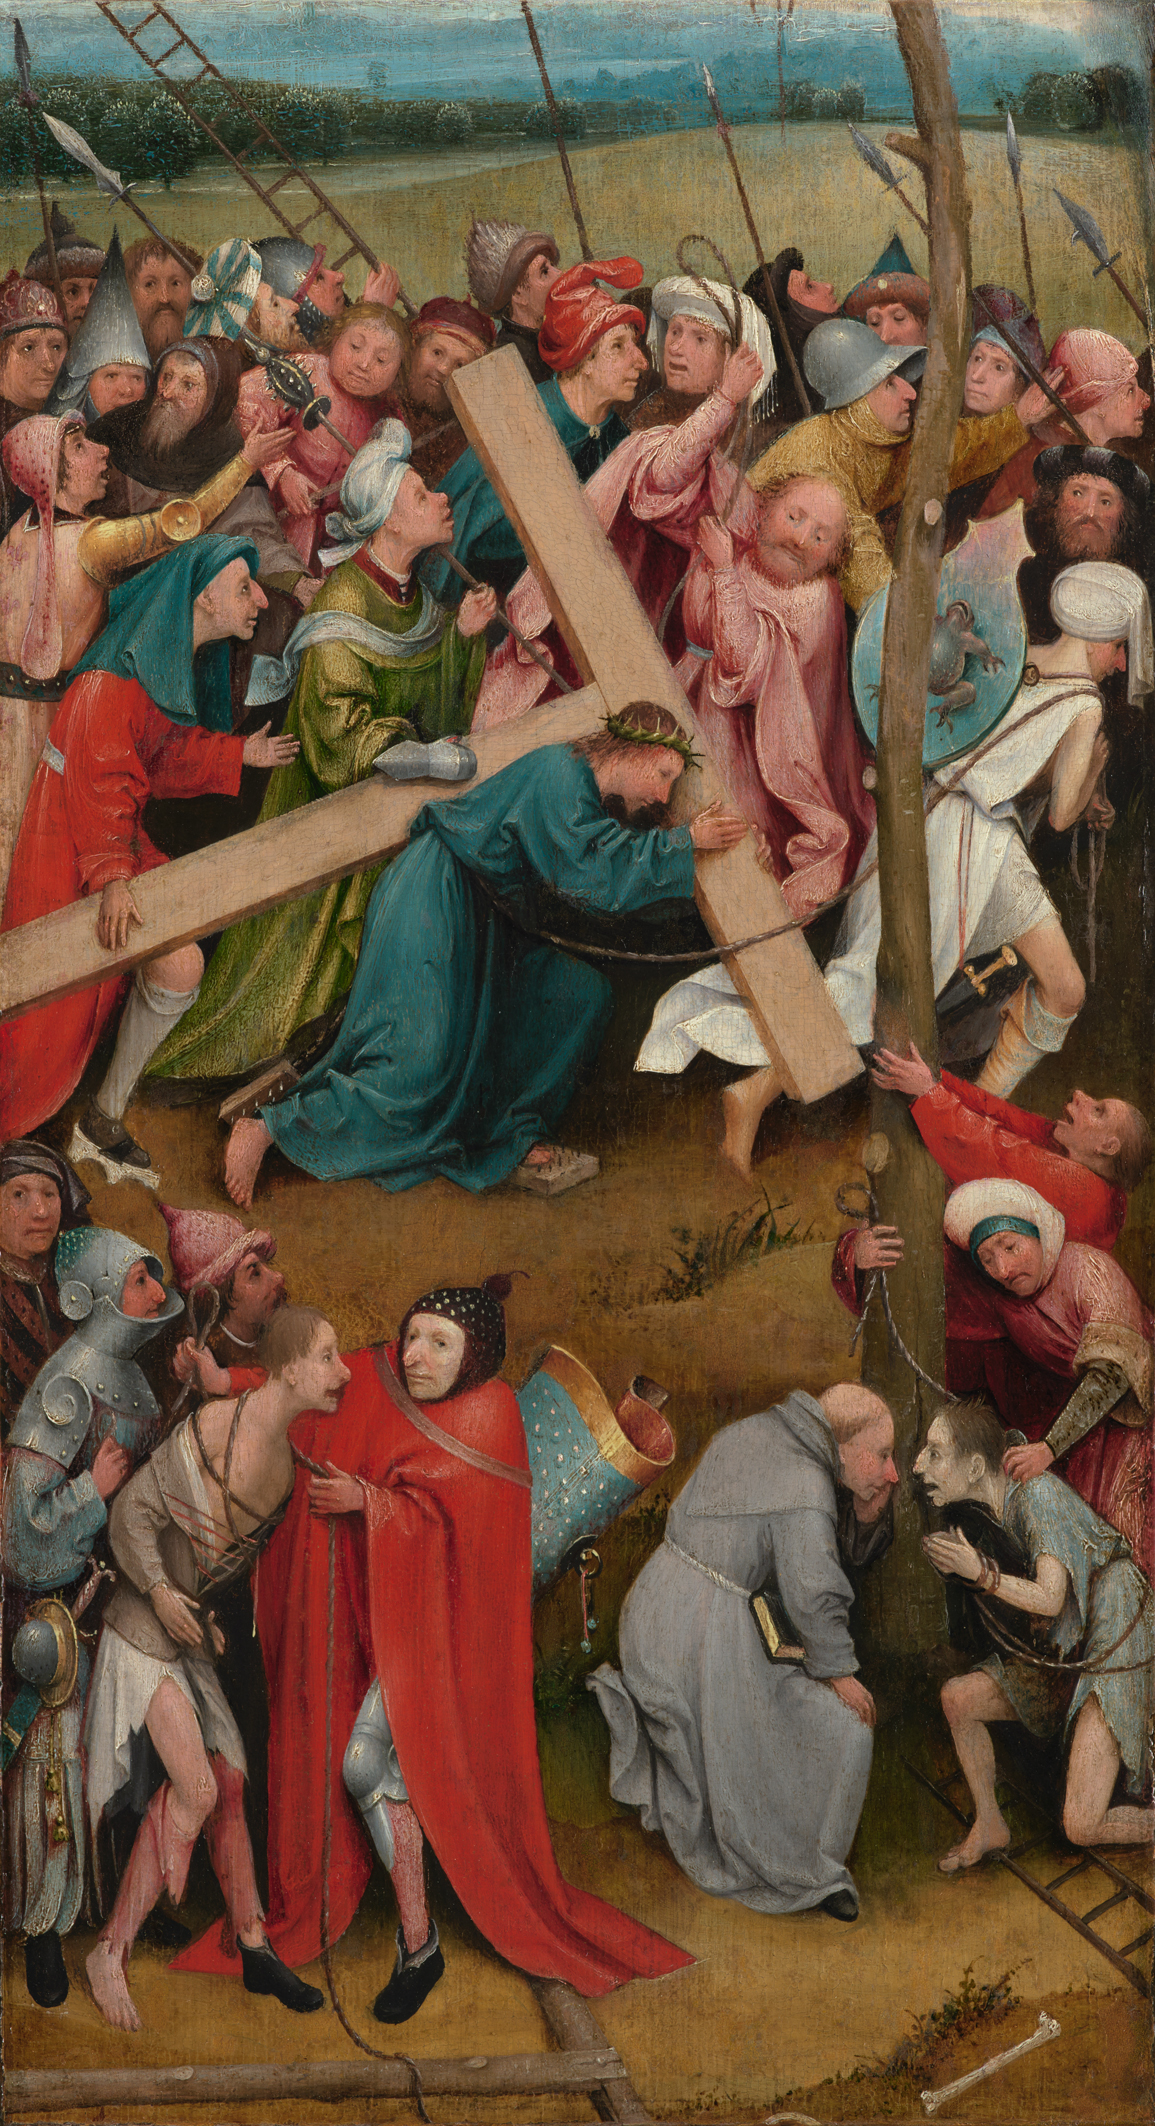 Cristo Carregando a Cruz by Hieronymus Bosch - 1480/90 Kunsthistorisches Museum